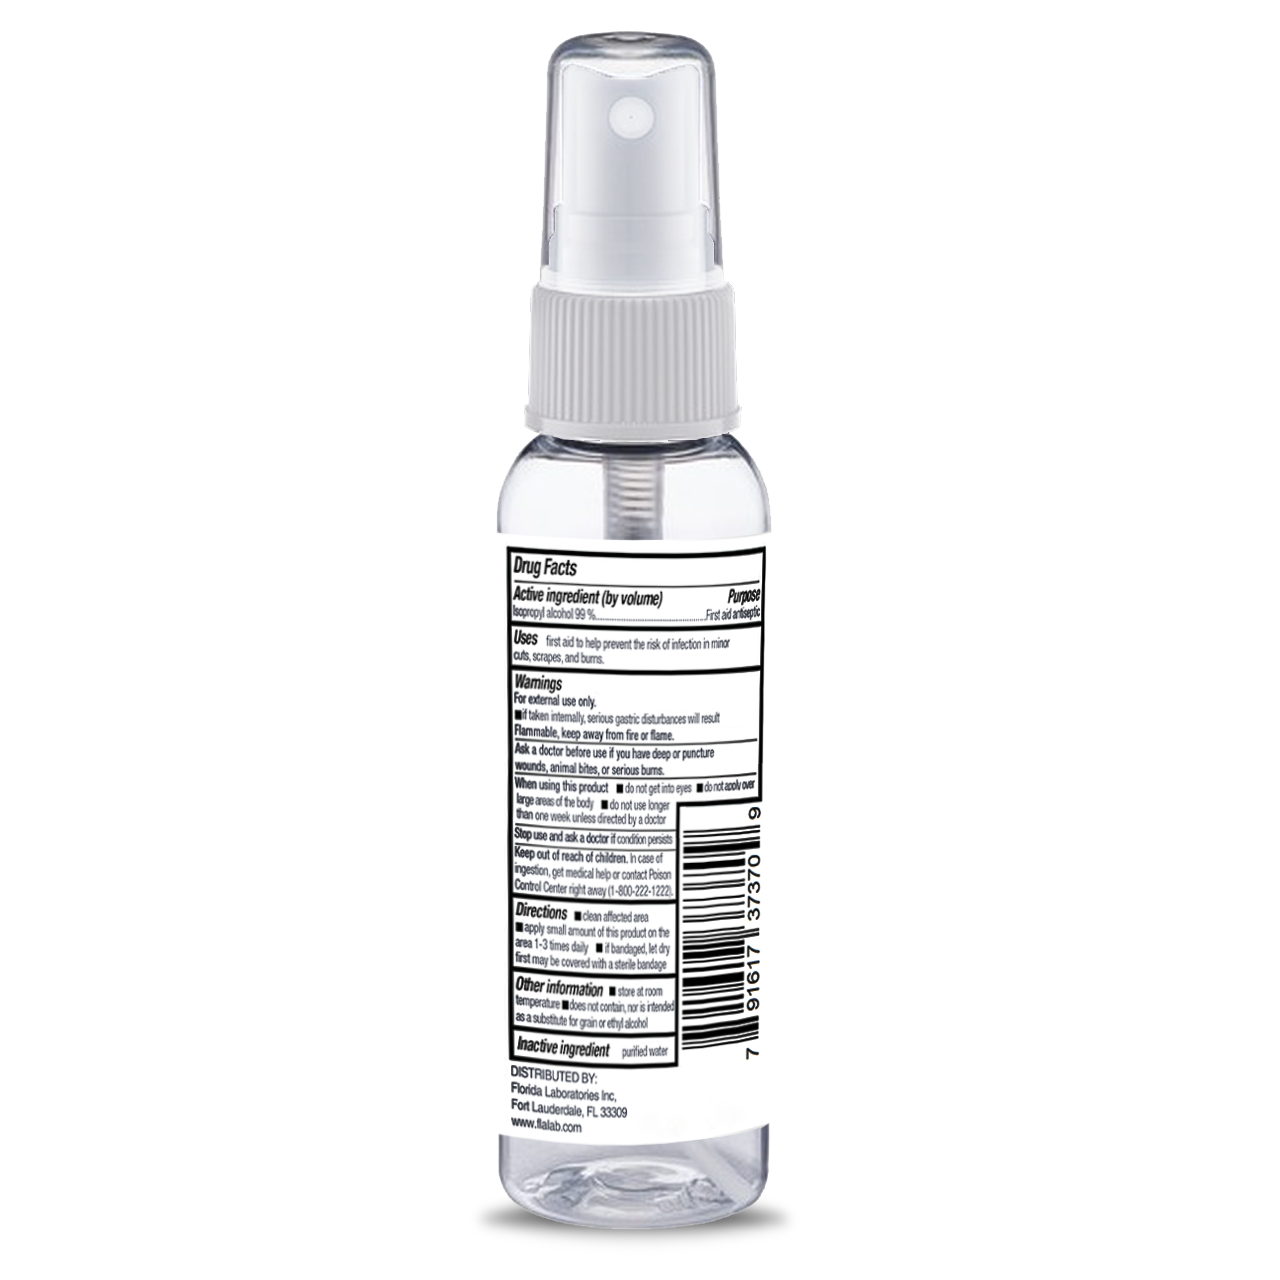 99.9% Isopropyl Alcohol Spray Bottle - 8oz - Small Werld Glass